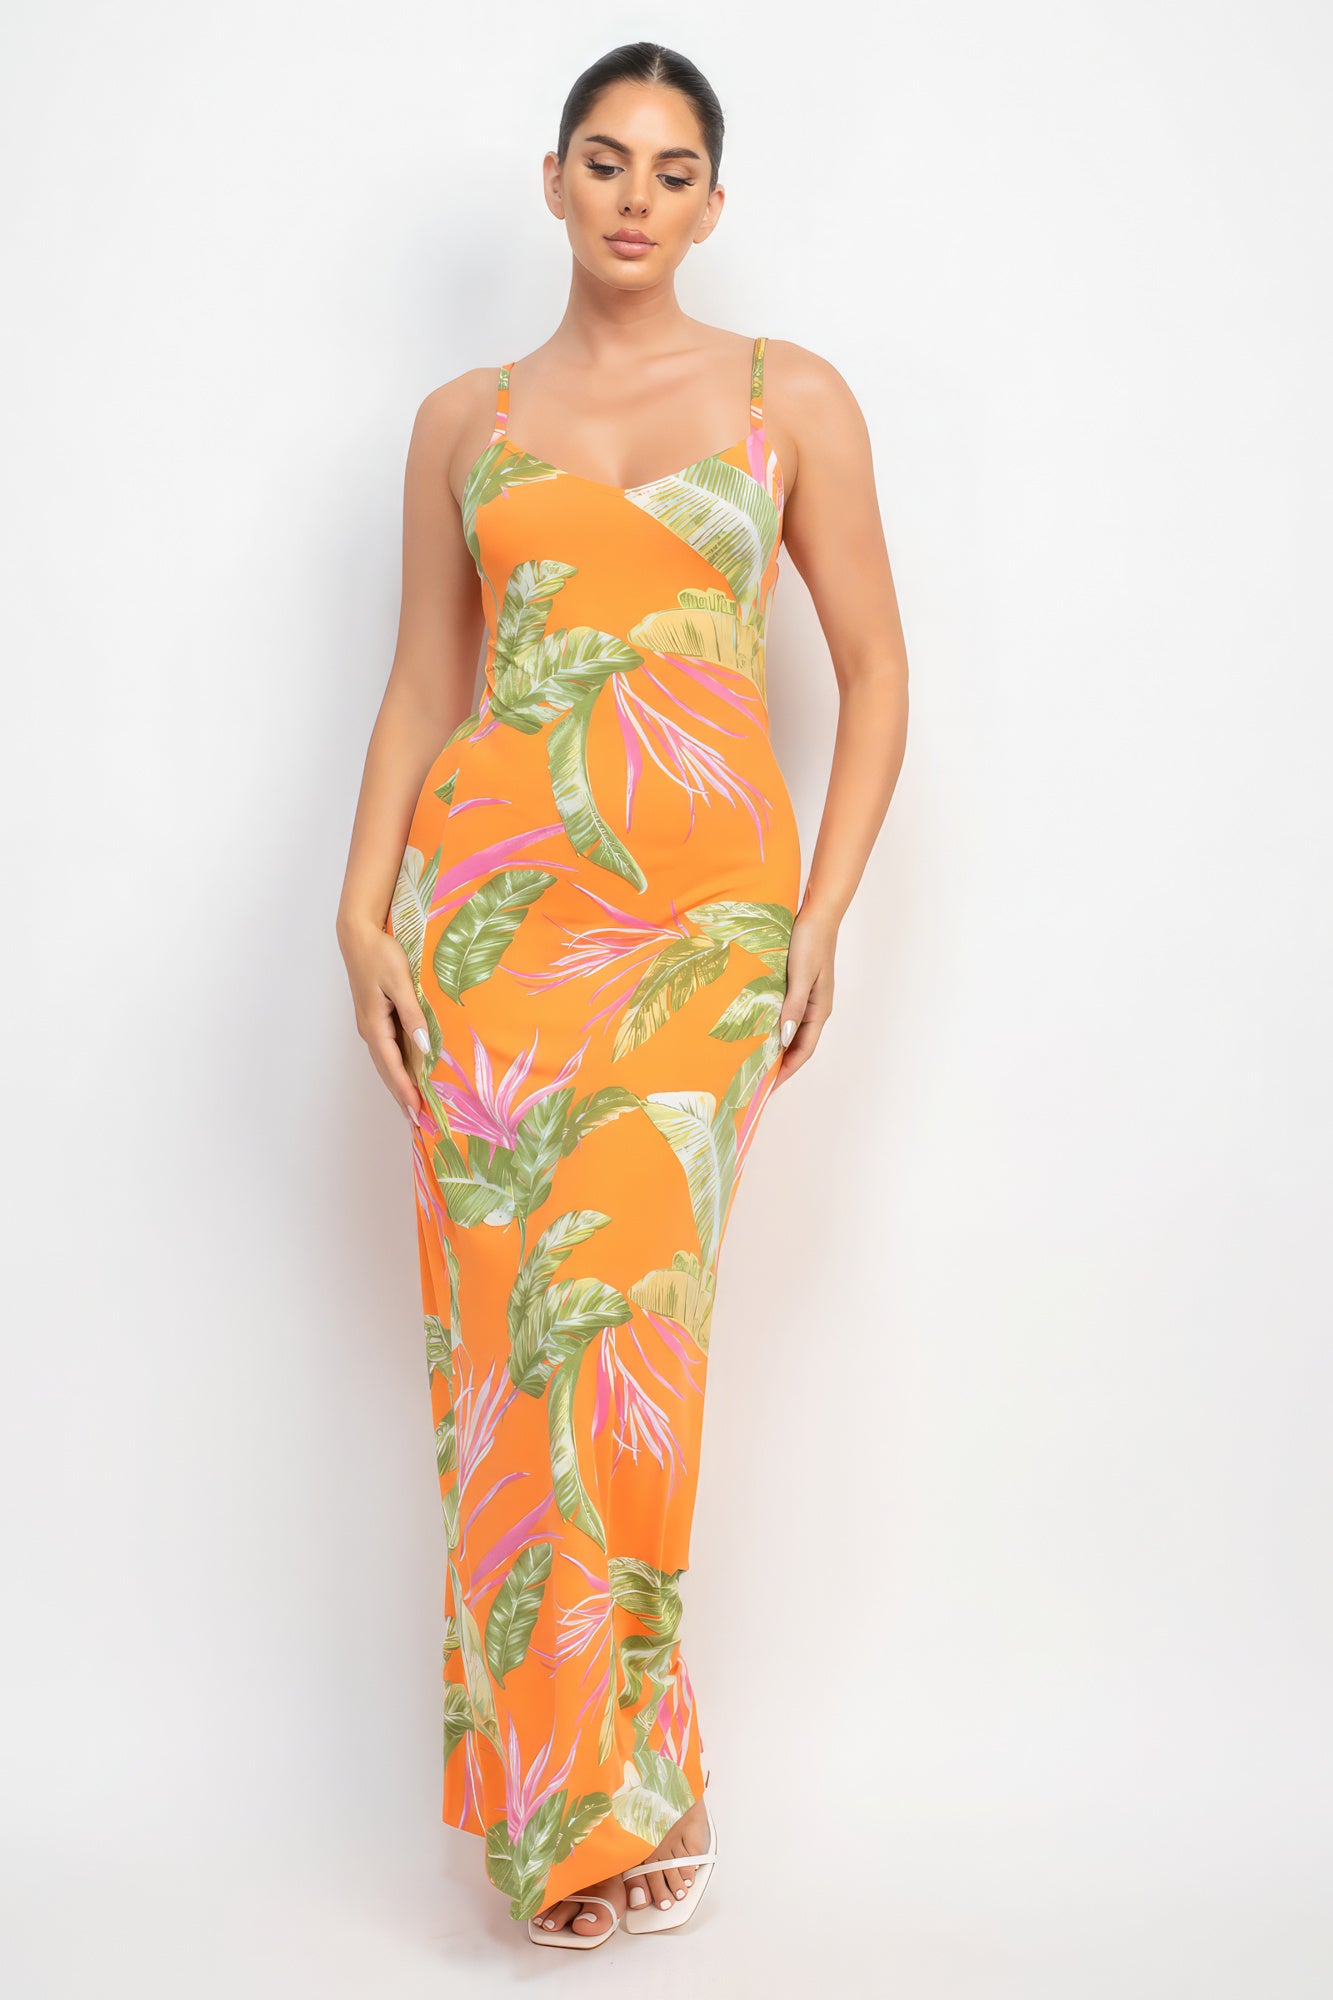 Spaghetti Strap Tropical Print Floral Maxi Dress - Shopping Therapy, LLC 